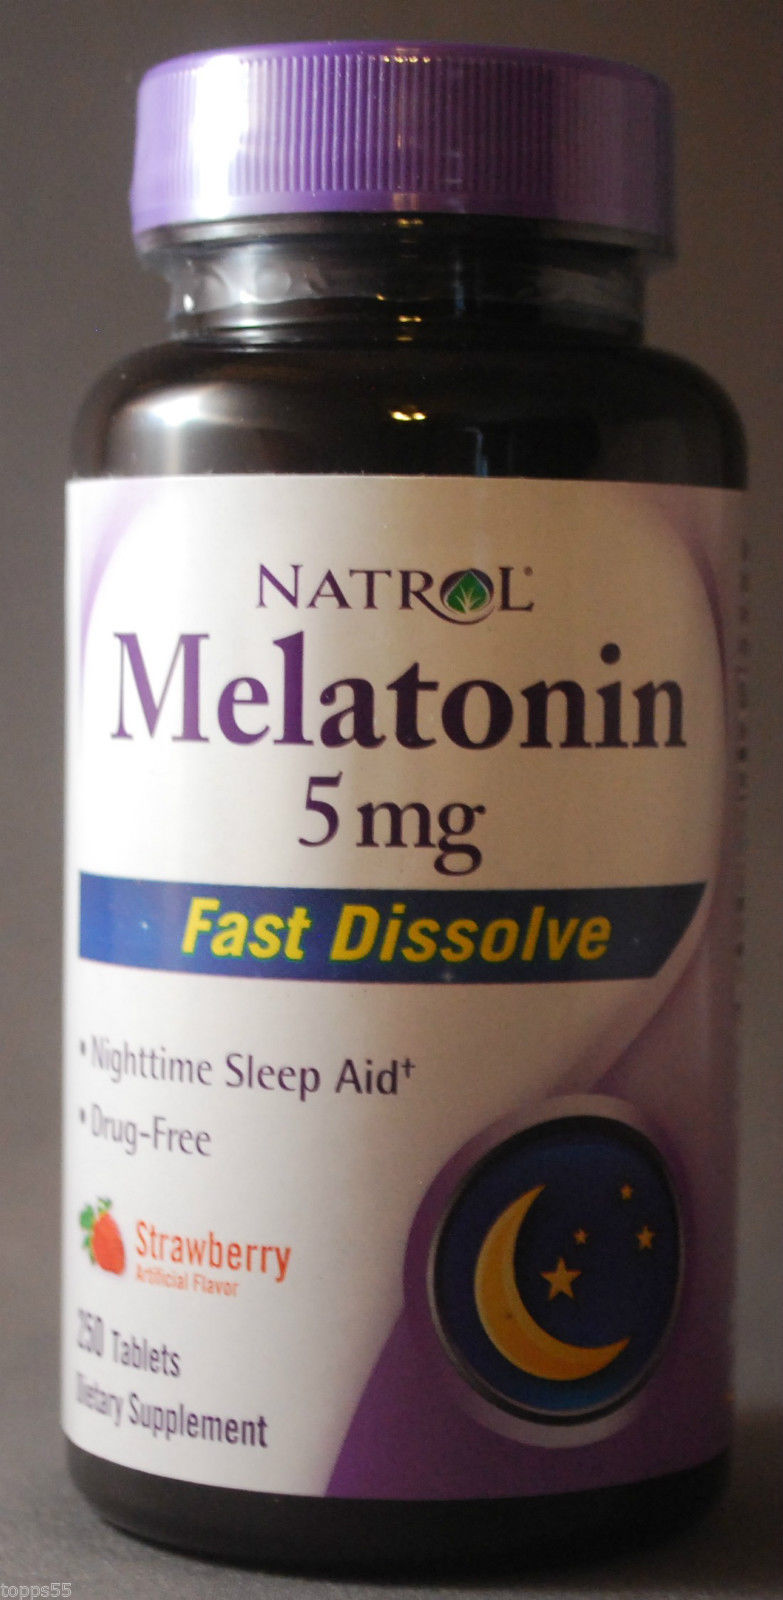 W250 ct Natrol Melatonin Fast Dissolve 5mg Sleep Aid Sleeping Pill Supplement NEW -- US Delivery